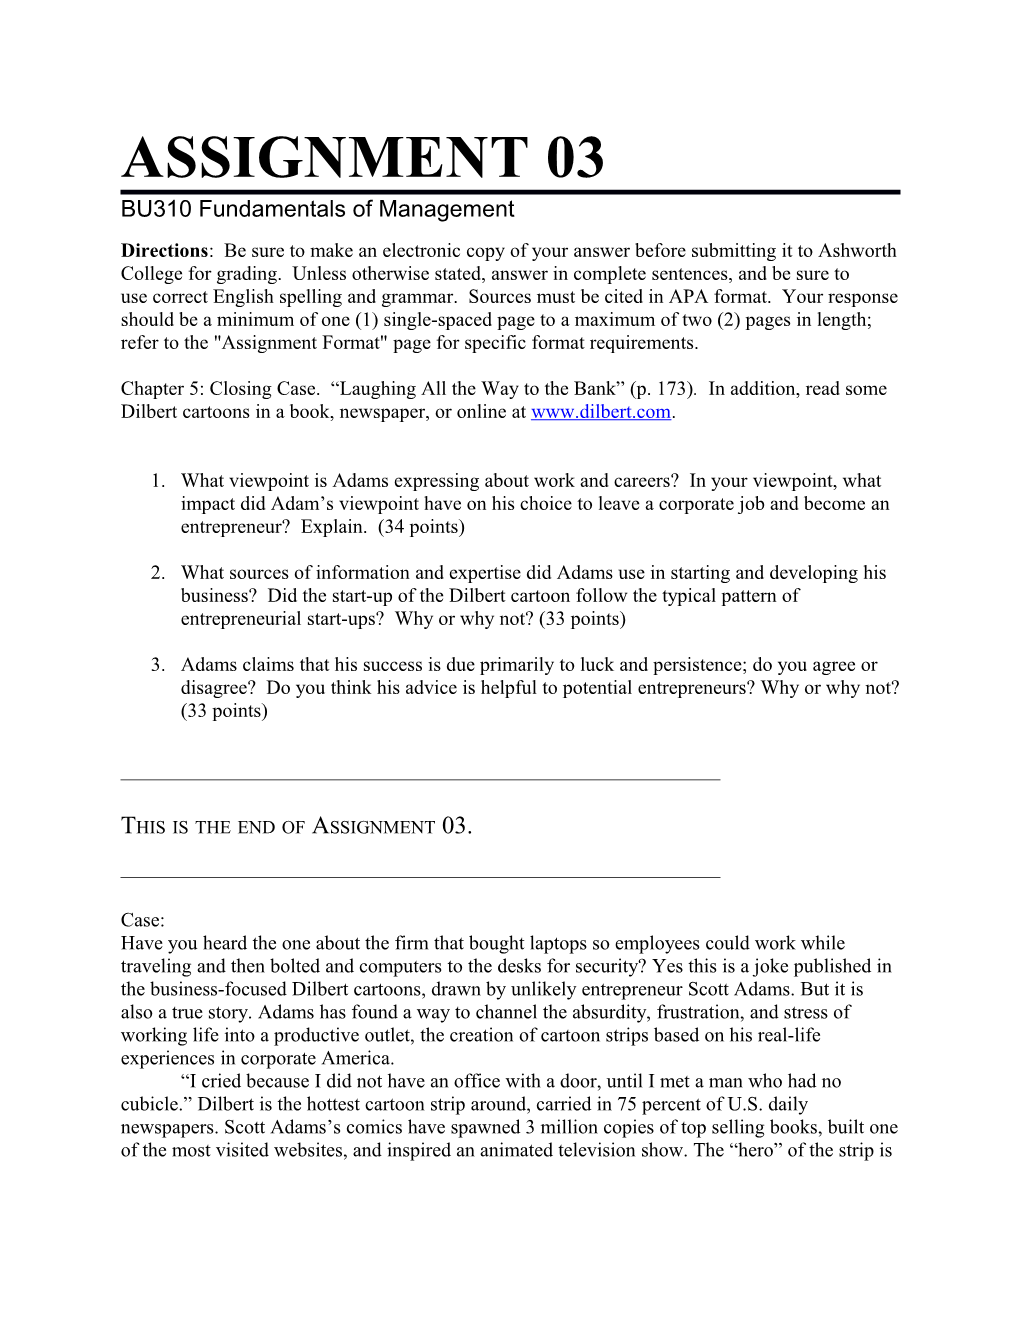 BU310 Fundamentals of Management